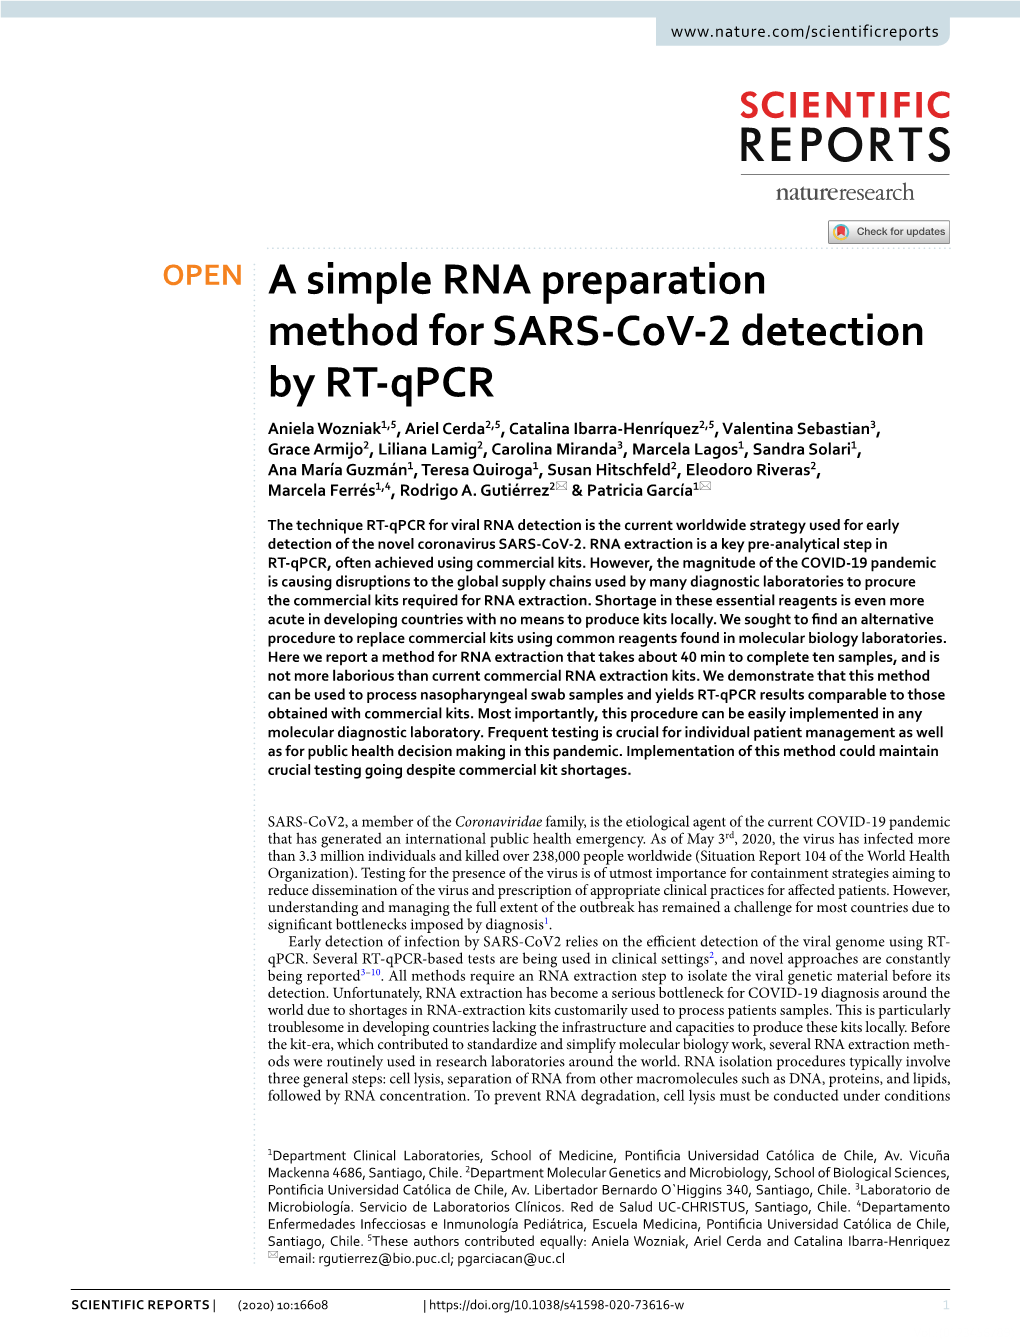 A Simple RNA Preparation Method for SARS-Cov-2 Detection by RT-Qpcr